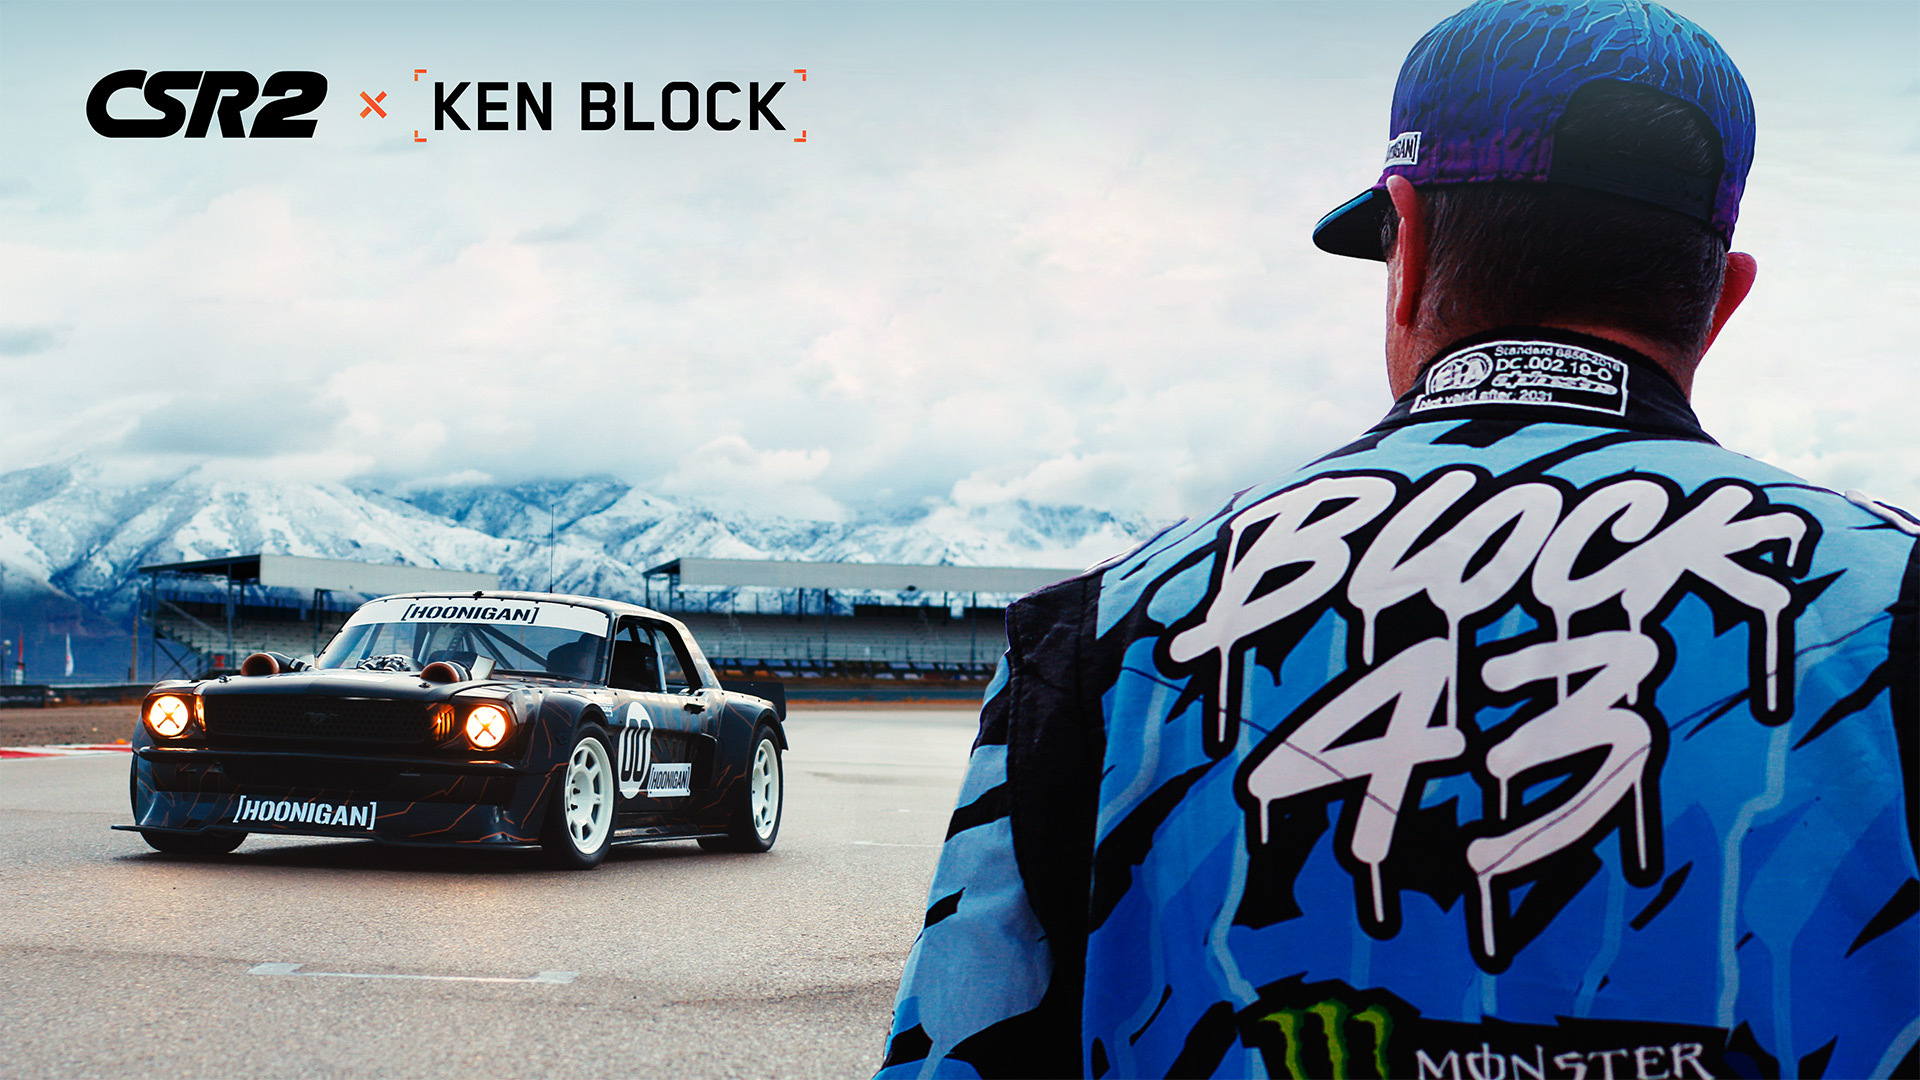 Professional Motorsports Can Still Learn from Ken Block